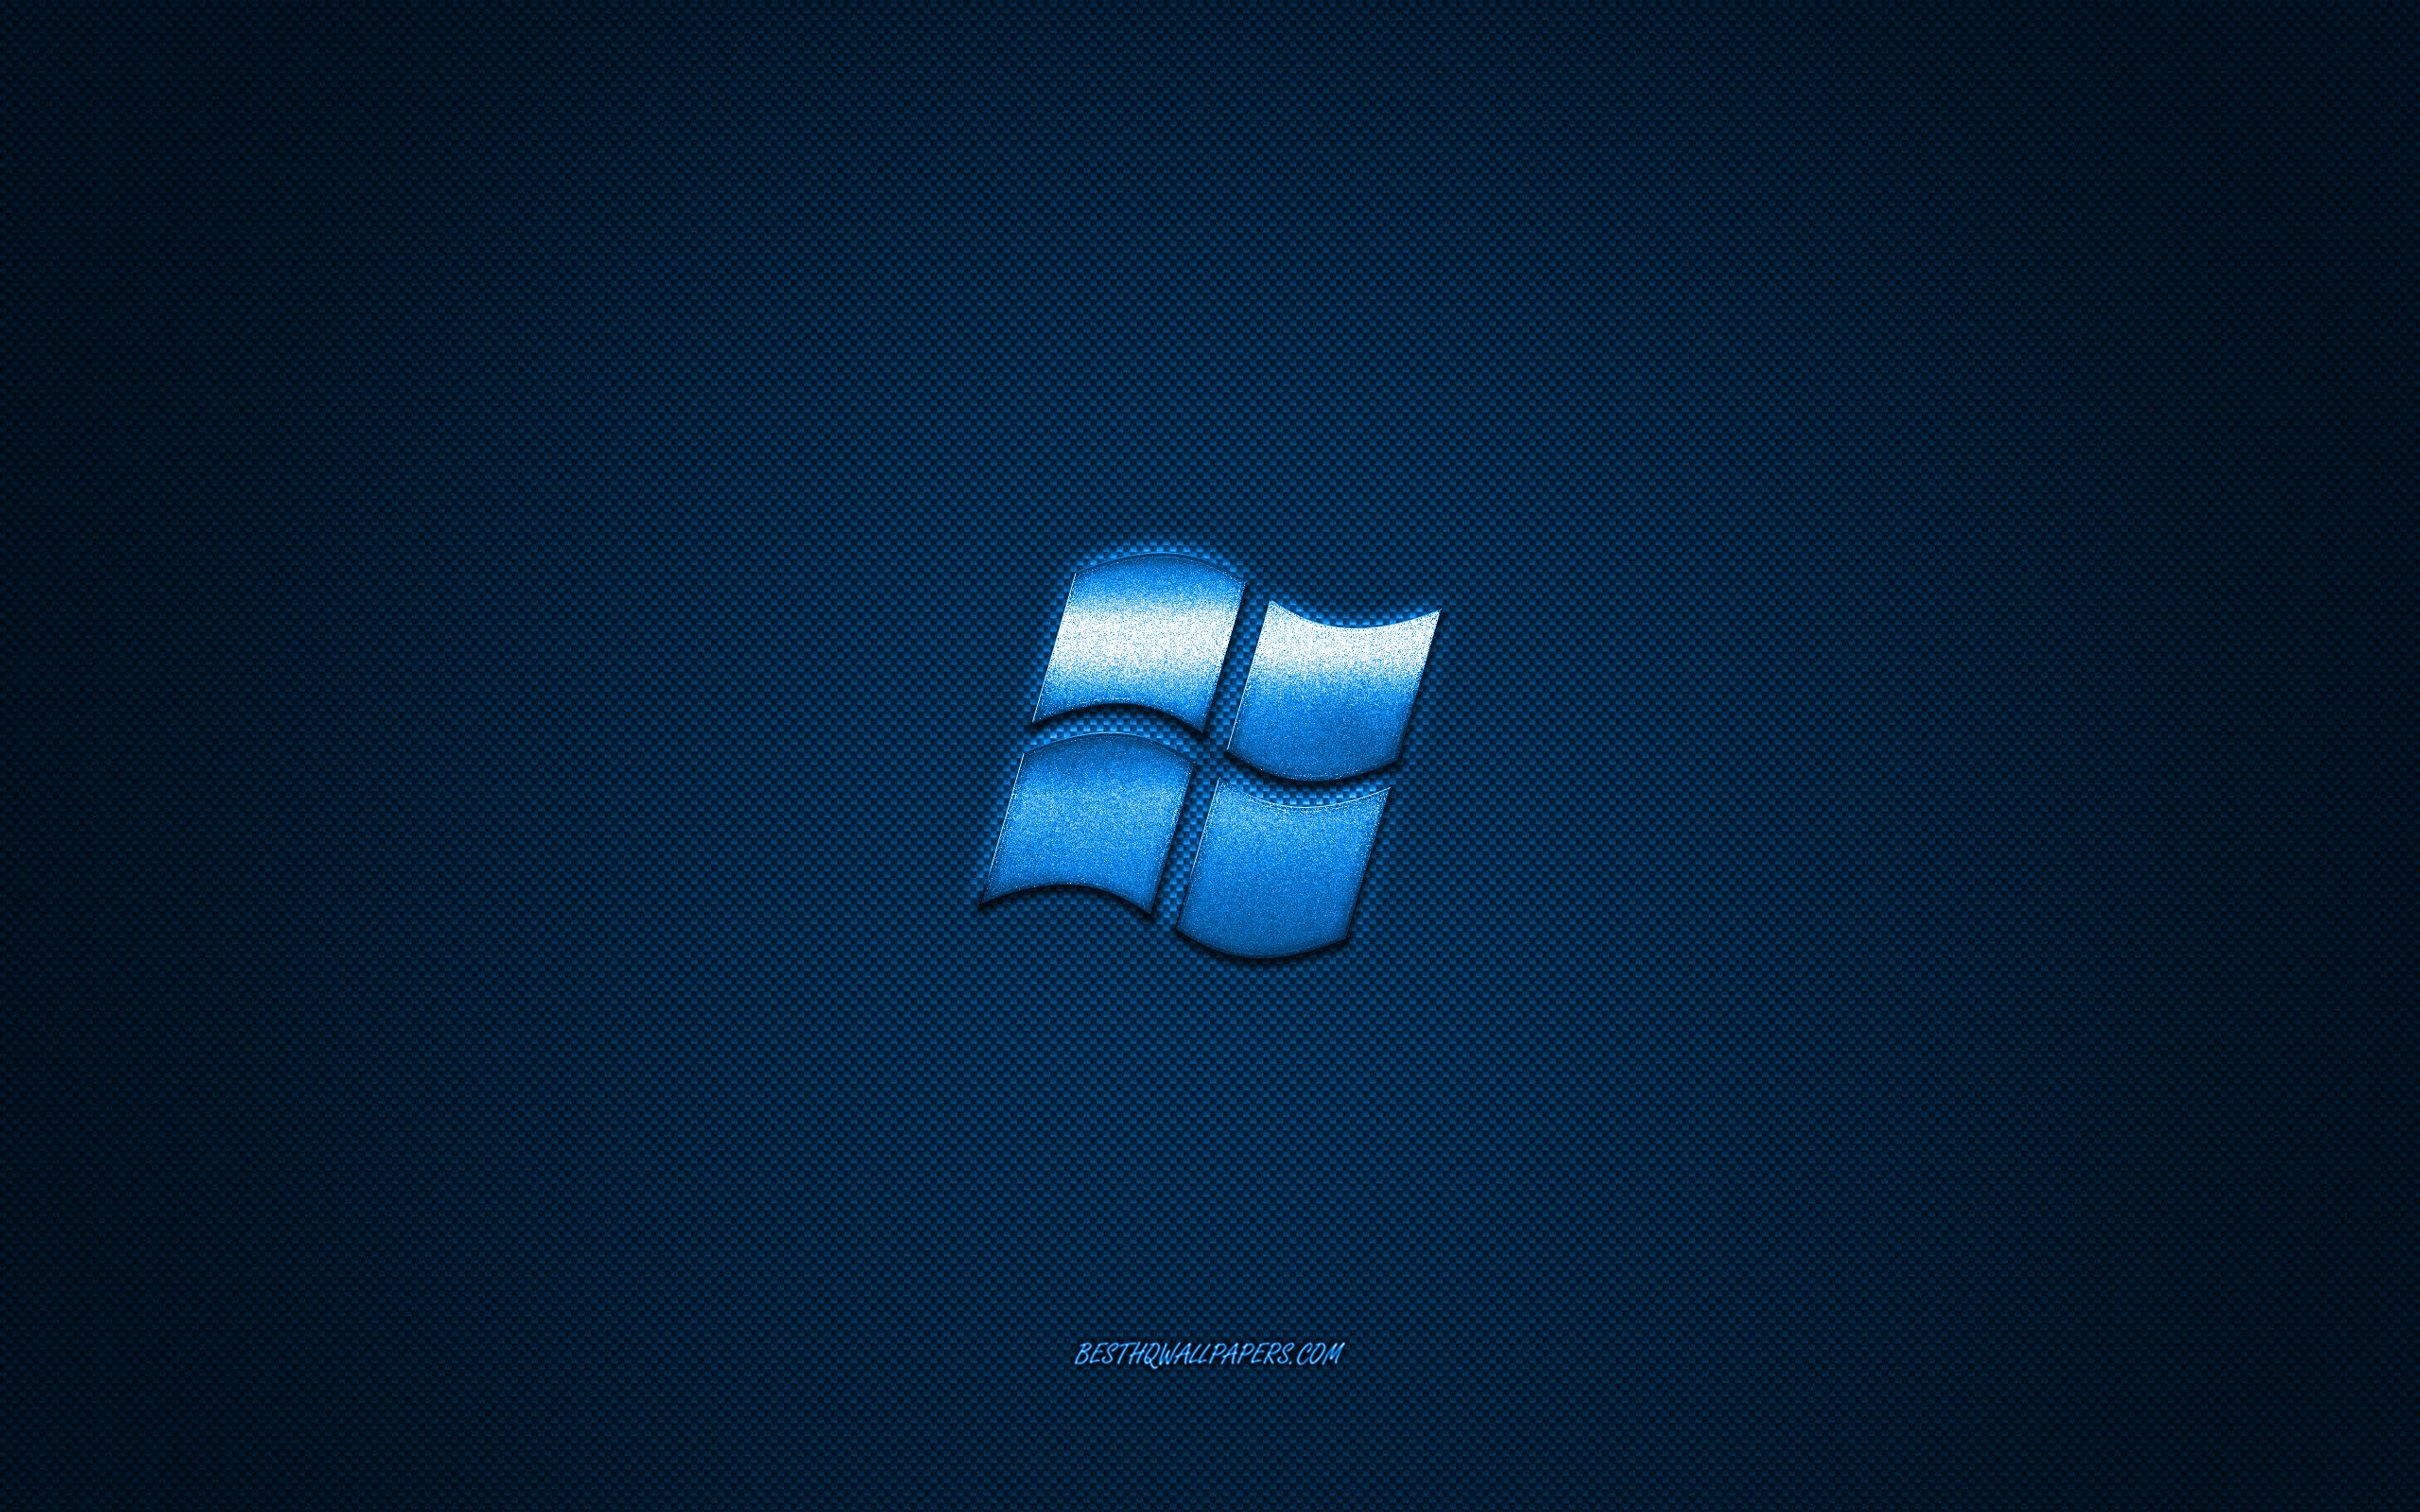 Download wallpaper Windows logo, blue shiny logo, Windows metal